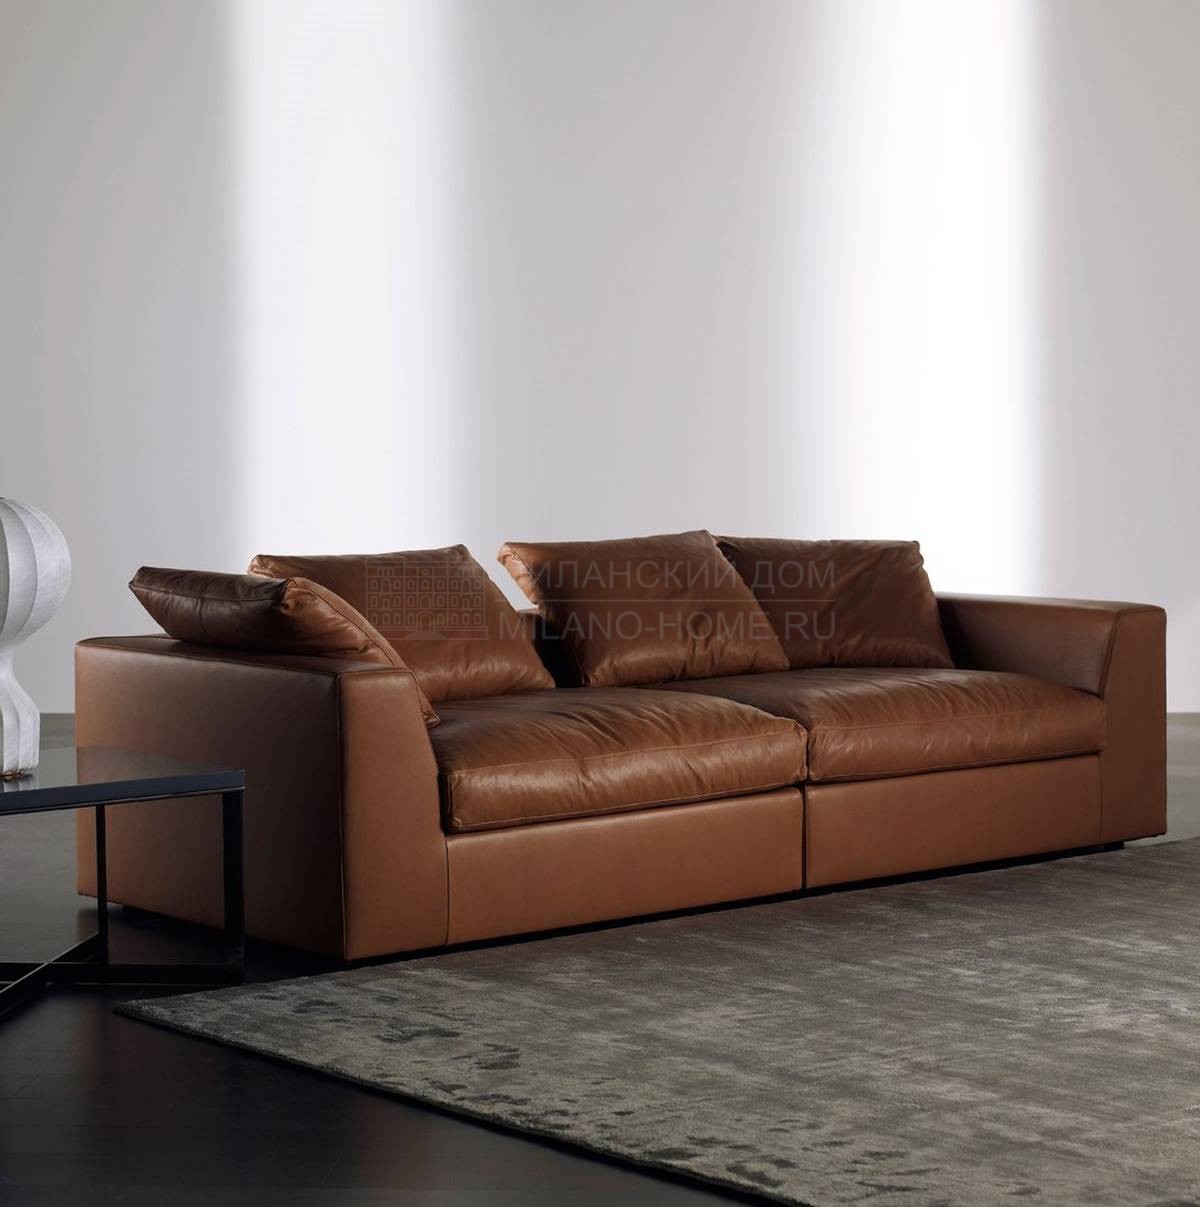 Модульный диван Louis leather plus из Италии фабрики MERIDIANI